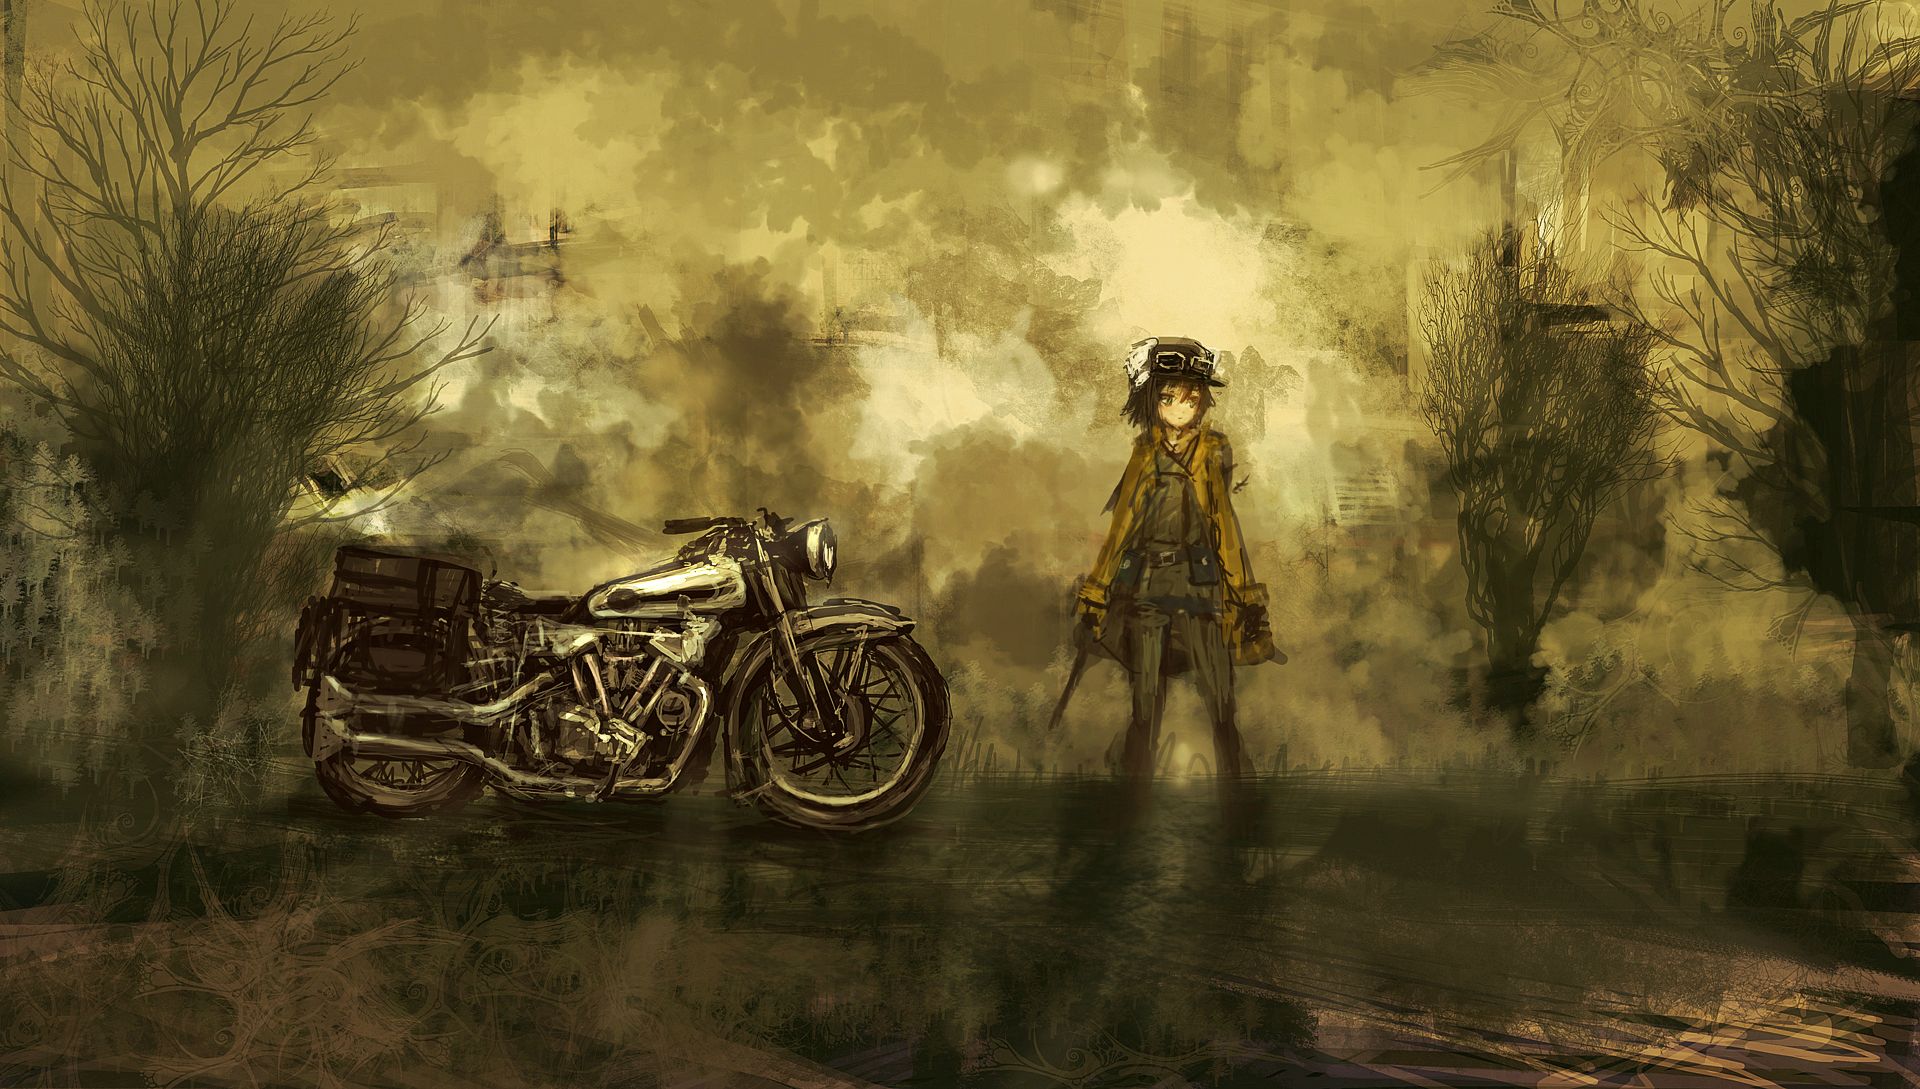 Anime Kino's Journey HD Wallpaper by Hisui Hitomi